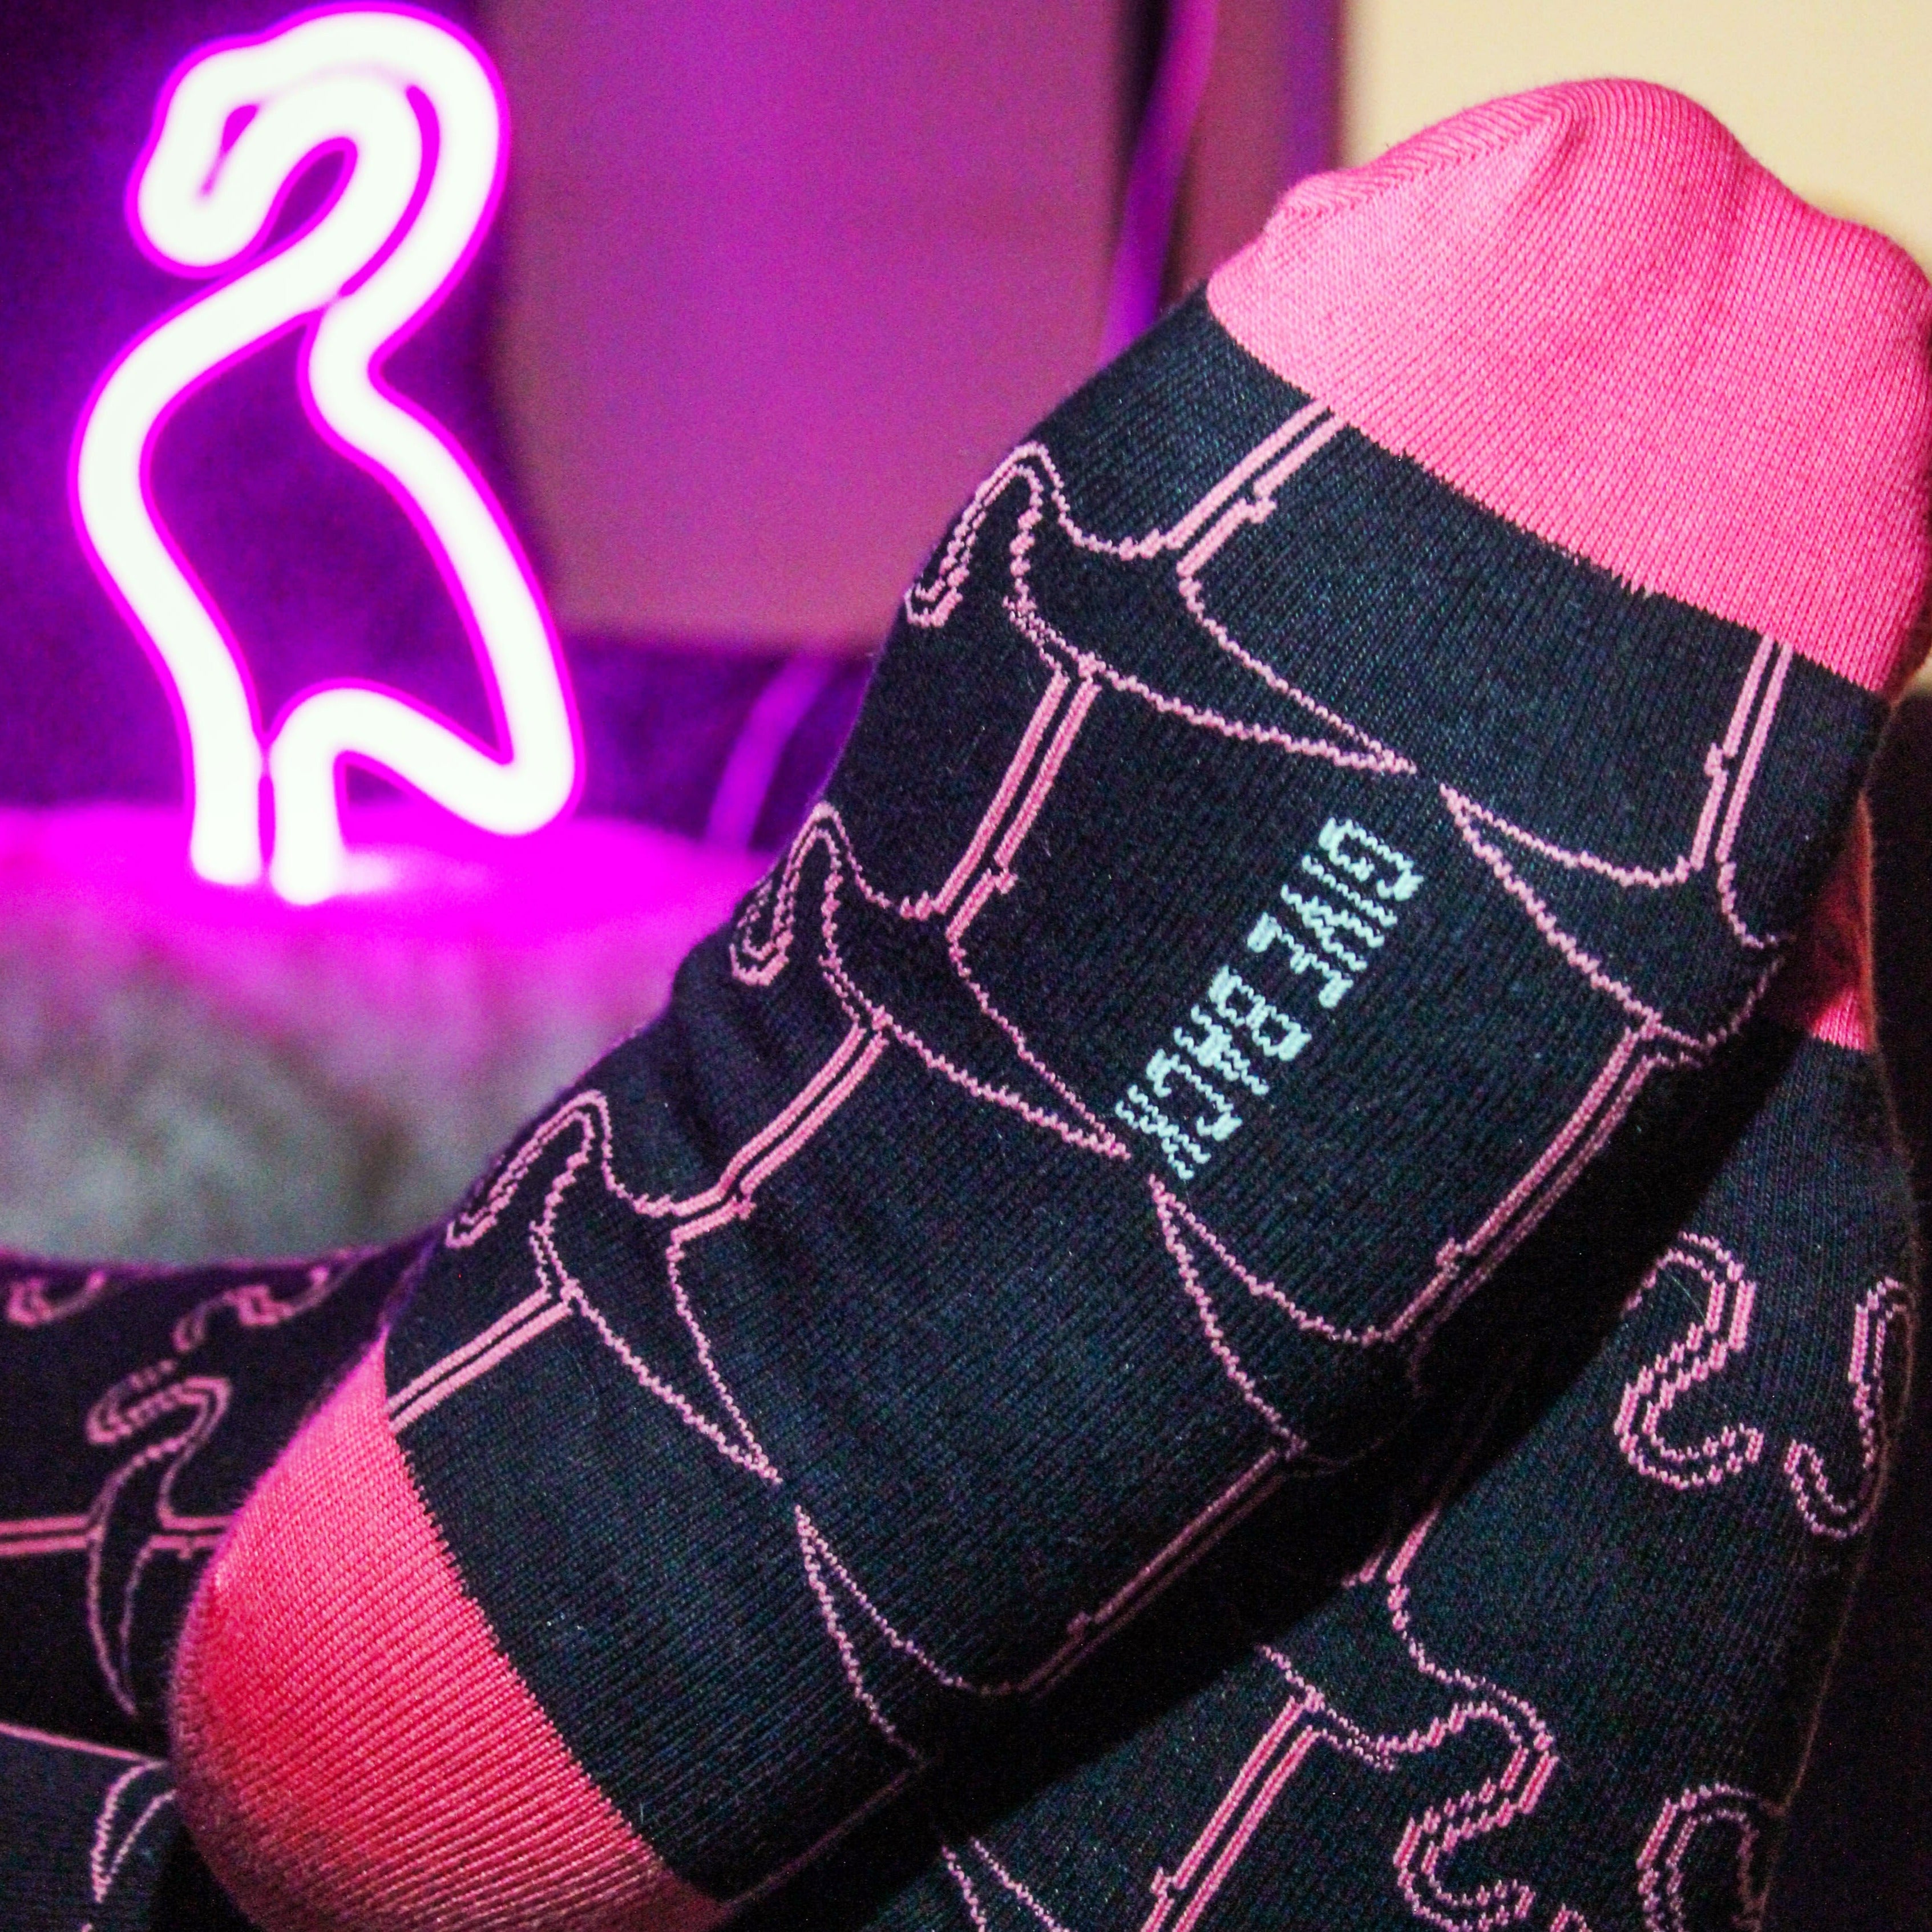 Stylish Flamingo Pattern Socks from the Sock Panda